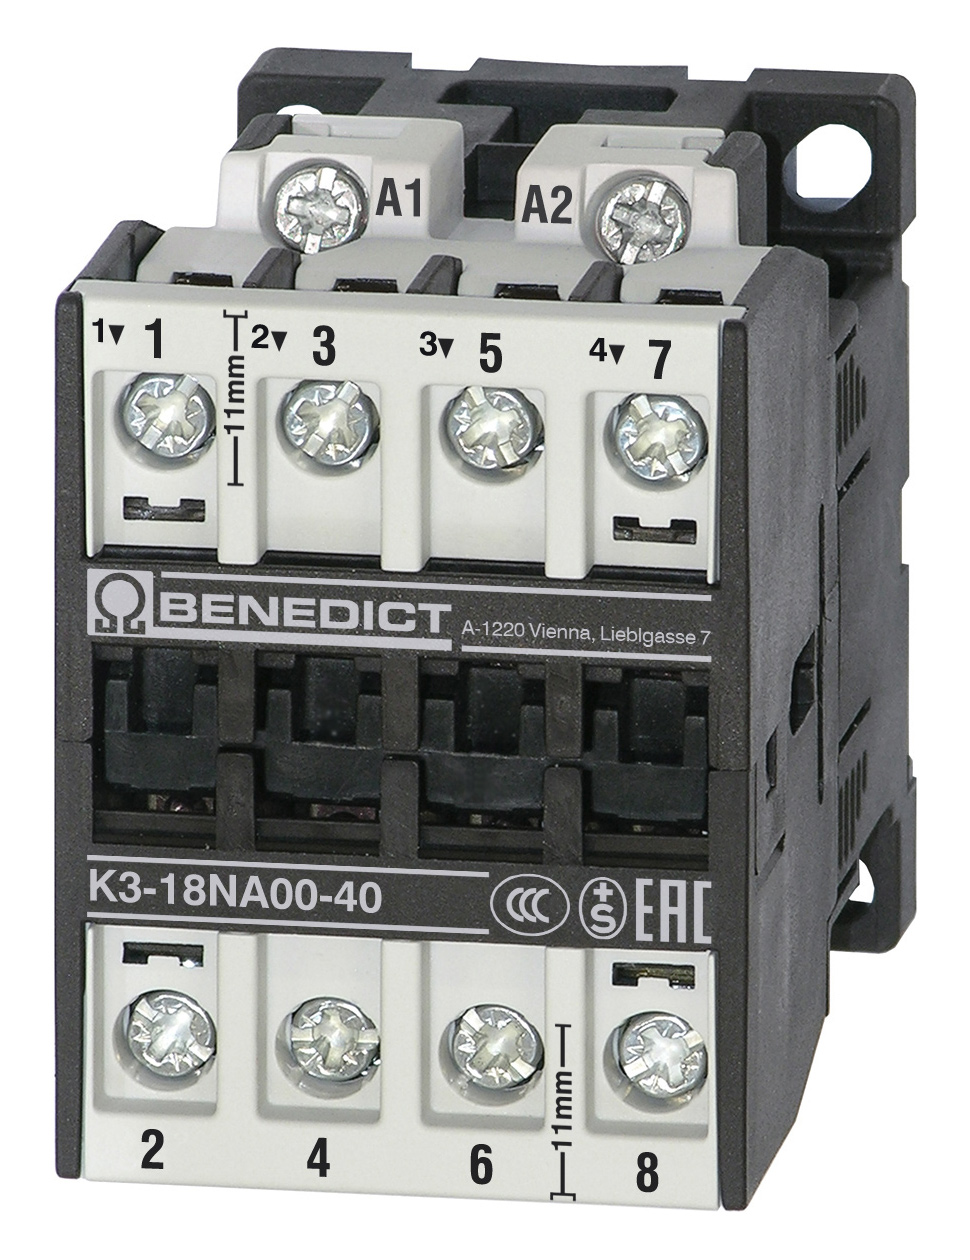  K3-18NA00-40 12 BENEDICT